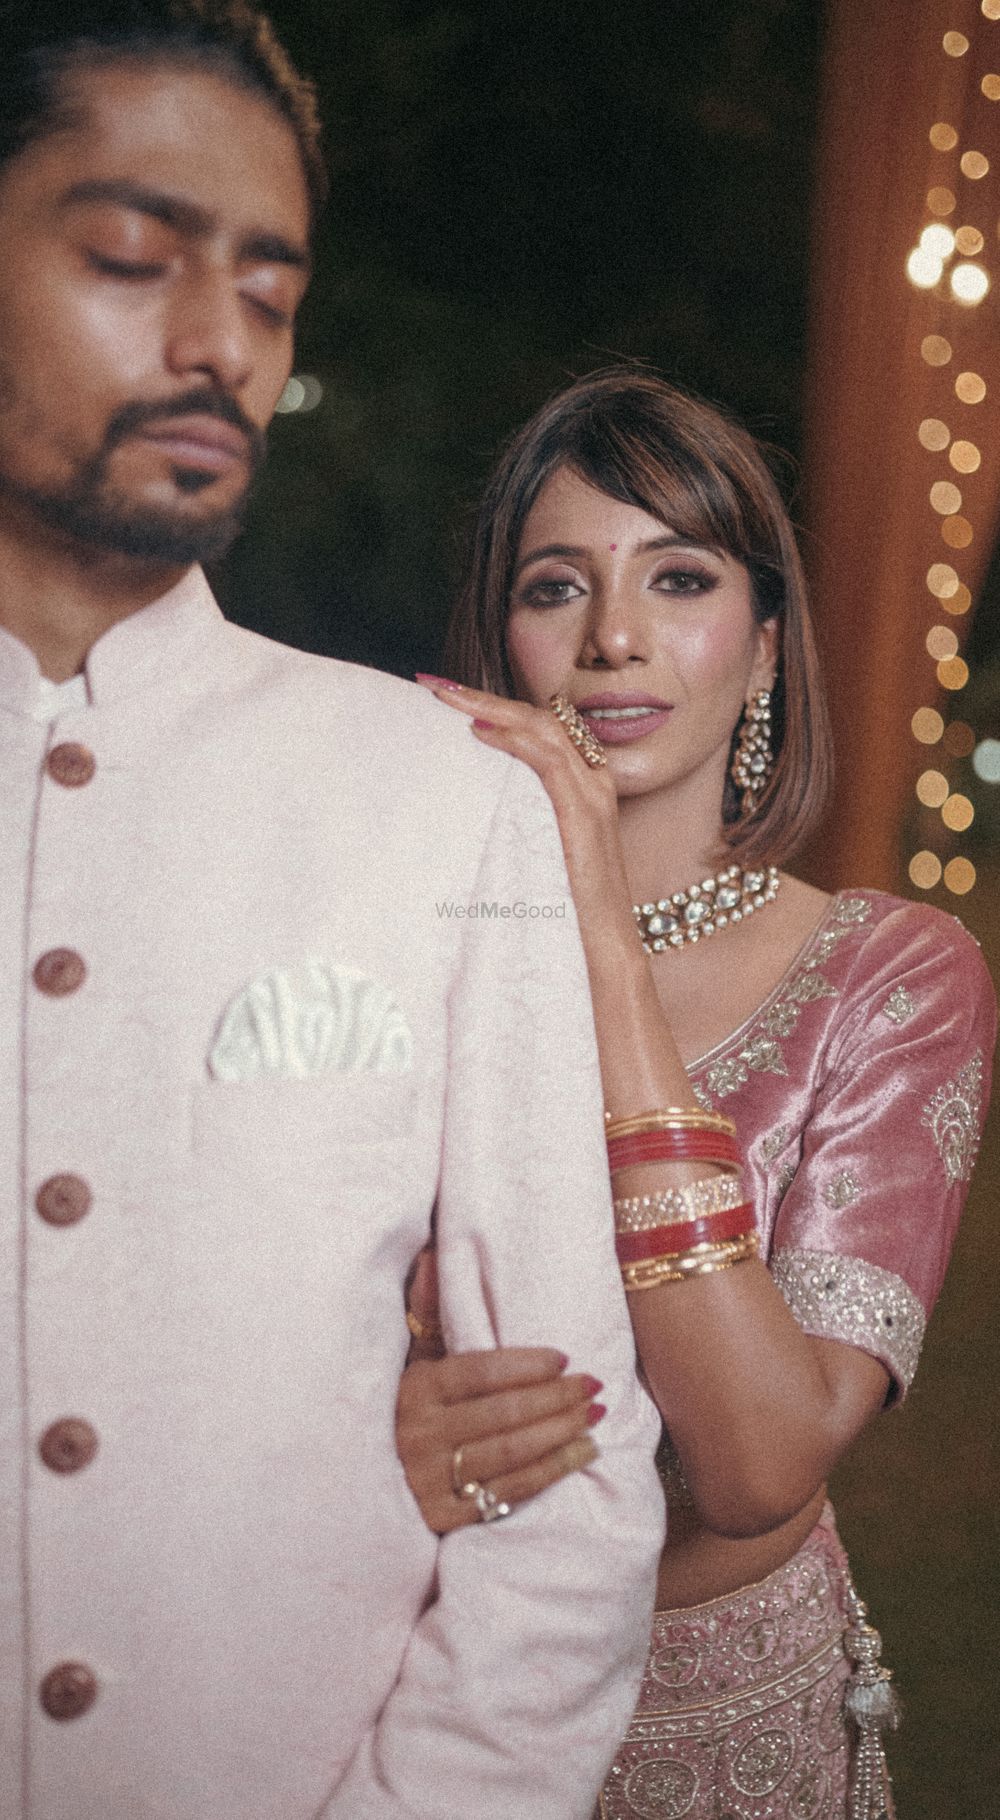 Photo From Priyanka & Siddharta - By Weddings by Sameer